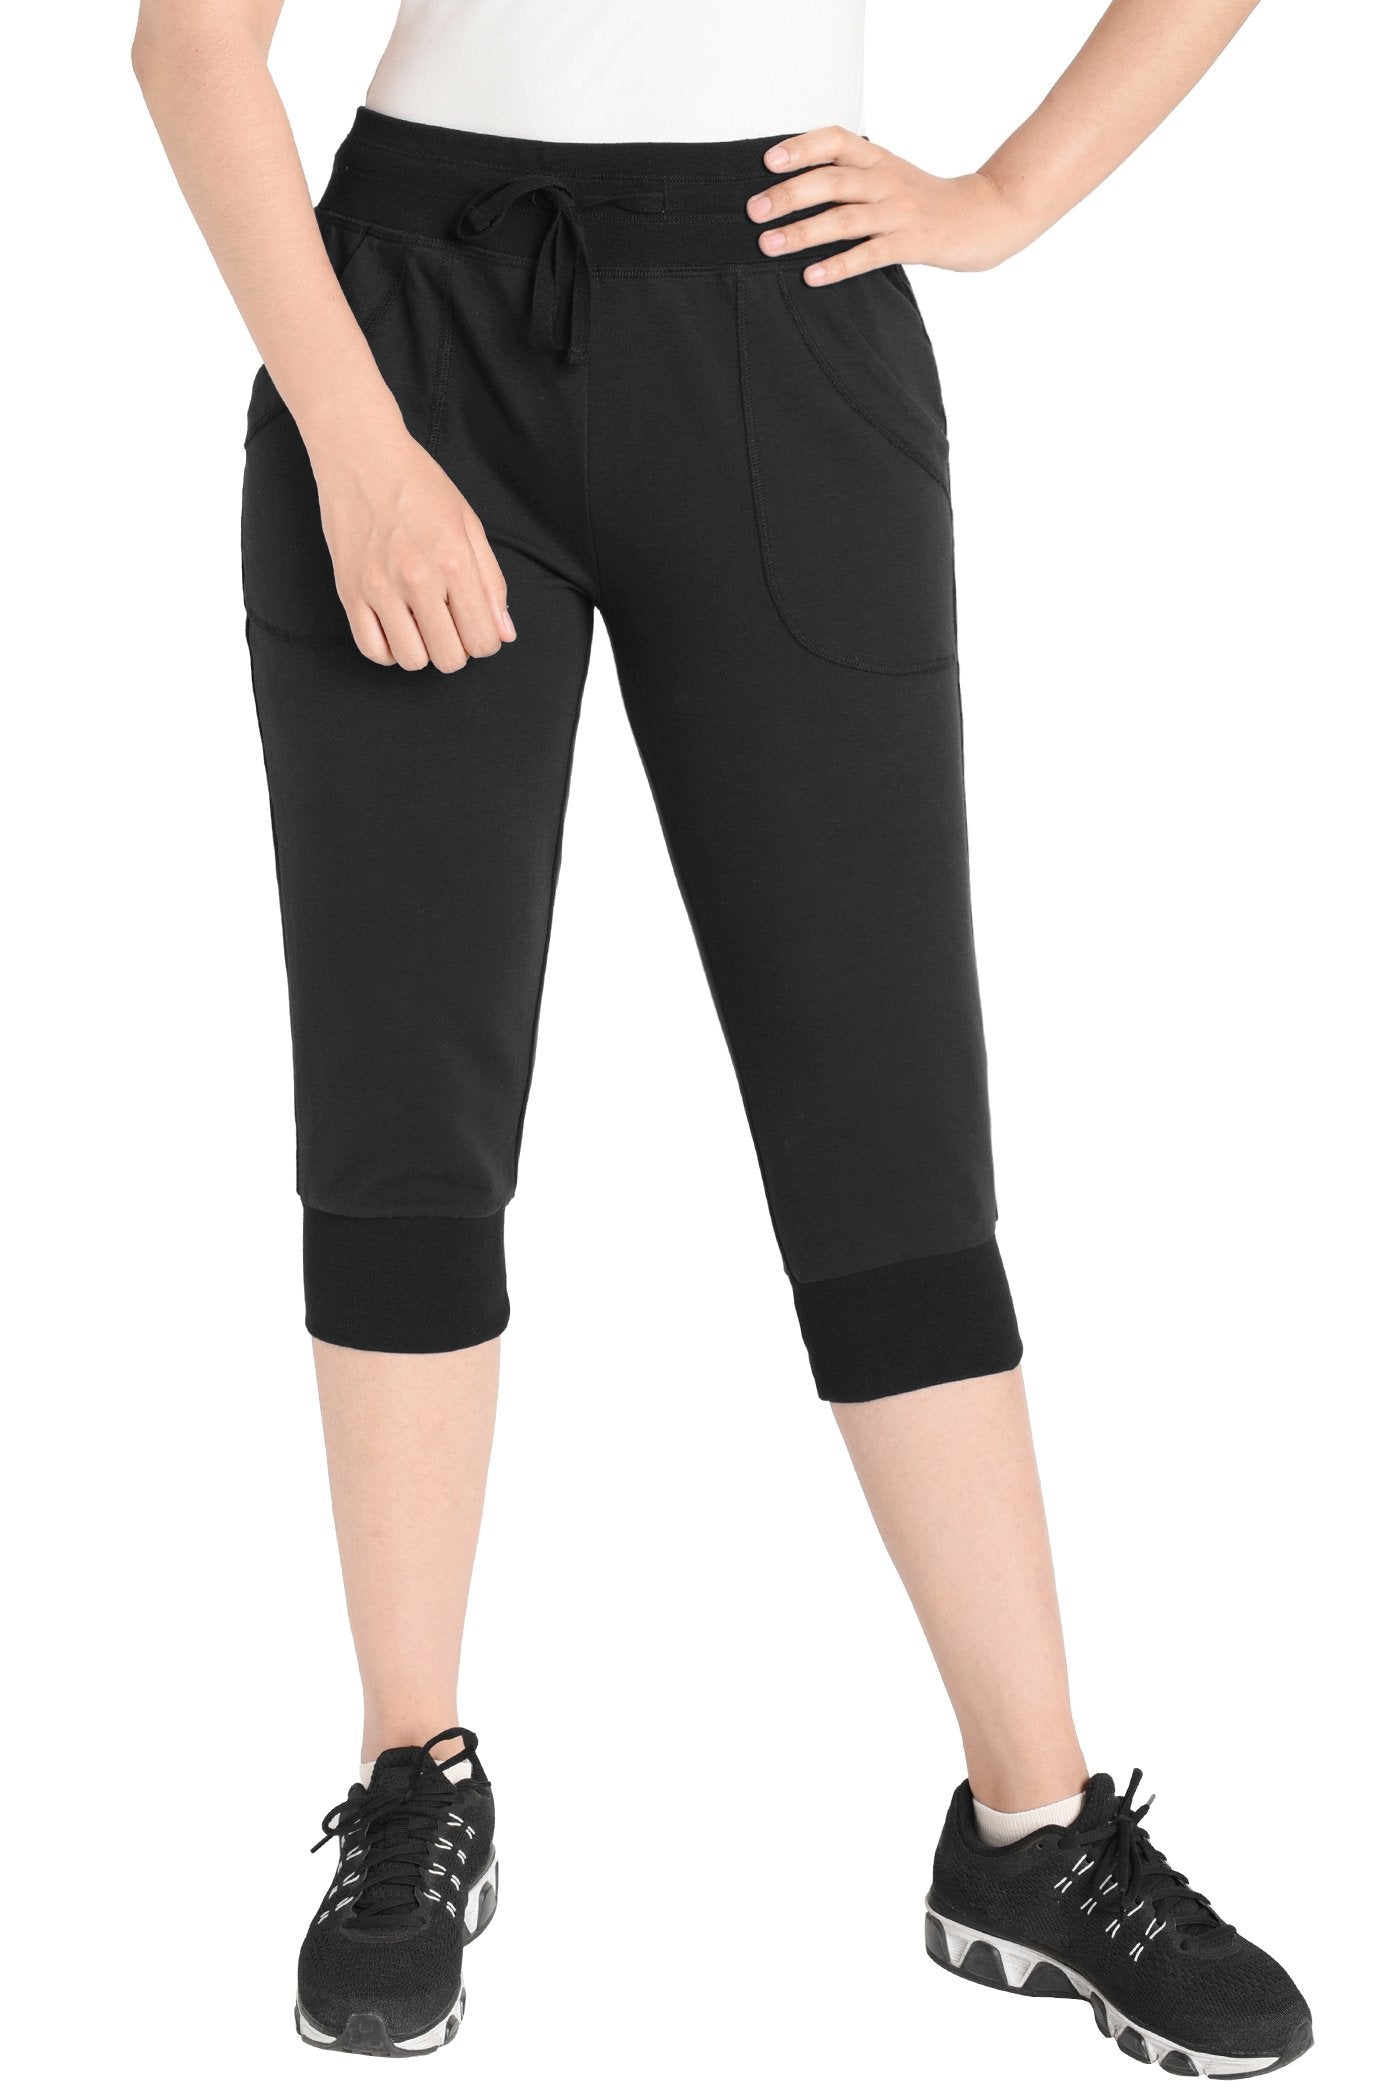 Women's Cotton Sweatpants Jersey Capri Pants with Pockets